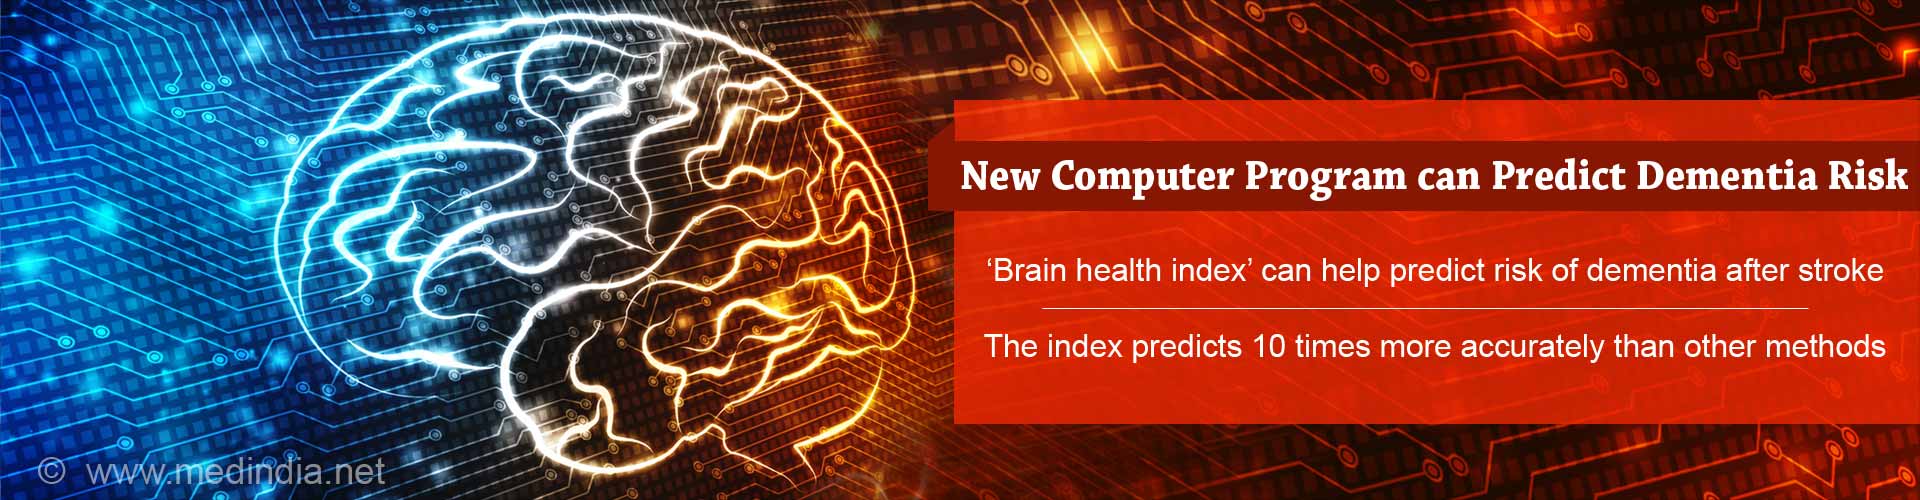 new computer program can predict dementia risk
- 